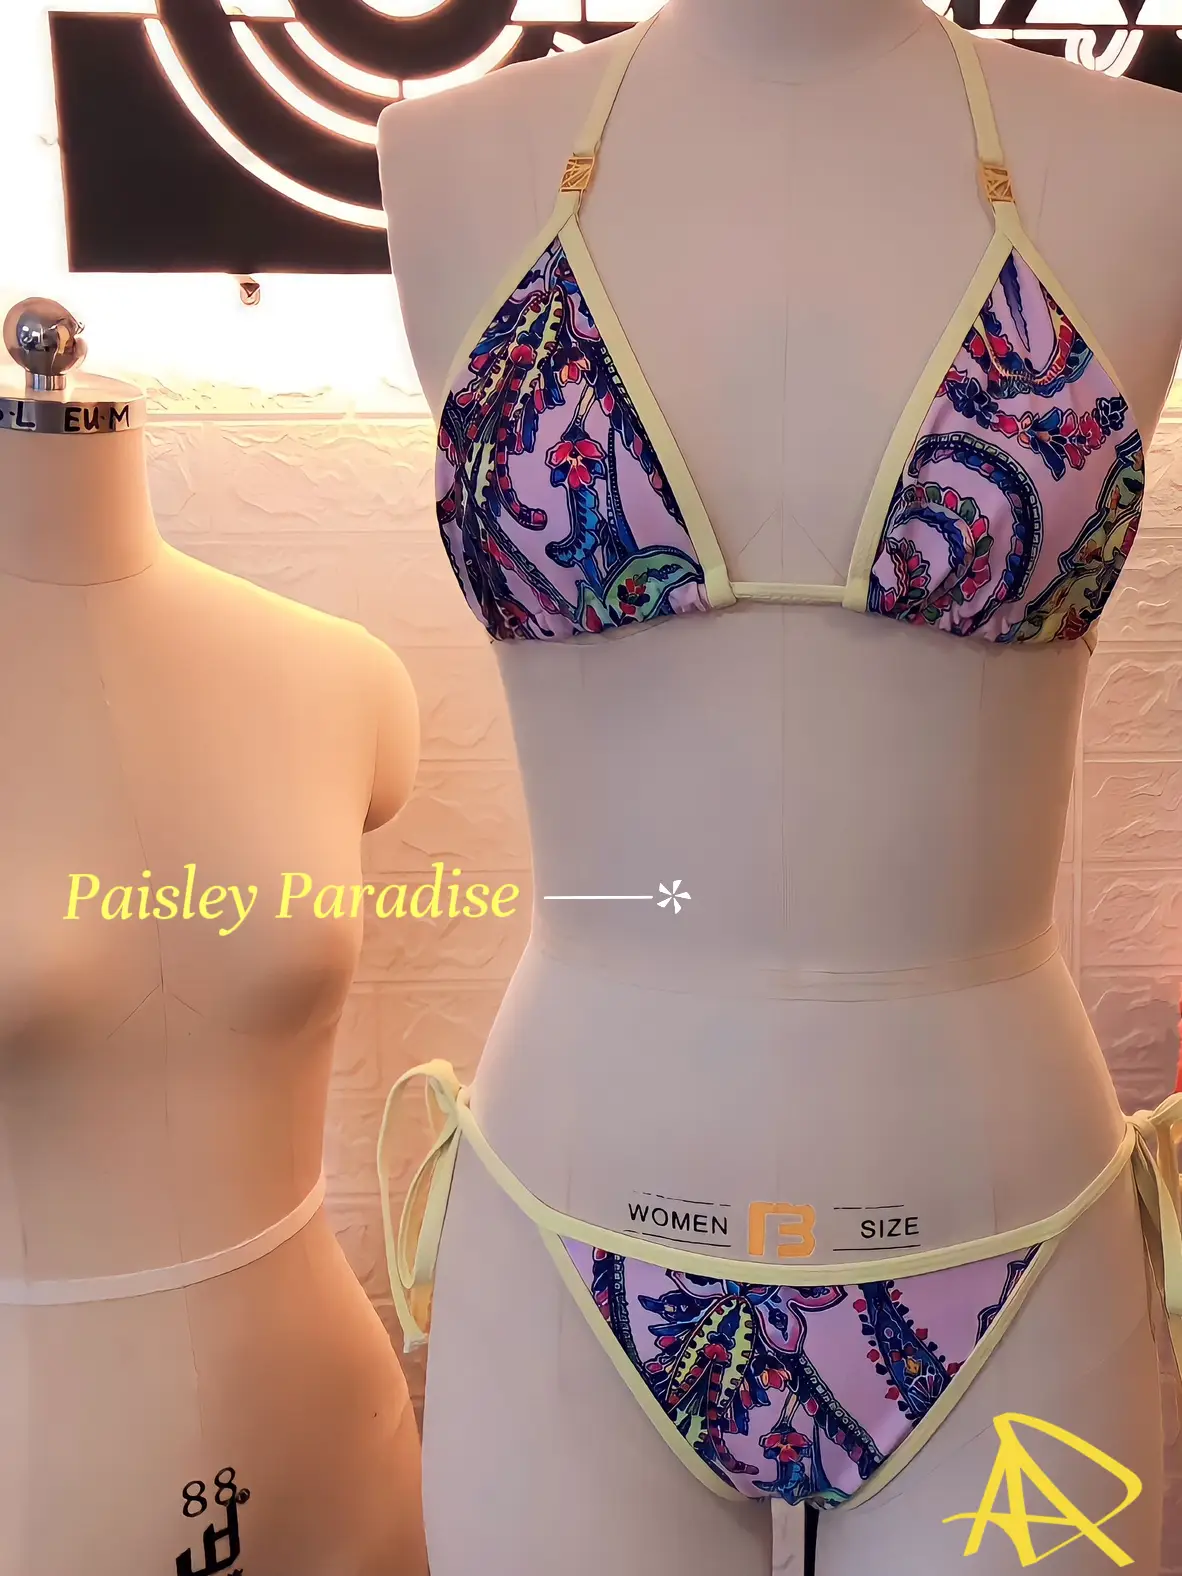 Must-Have Target Bikini Haul  Gallery posted by StephaniePernas